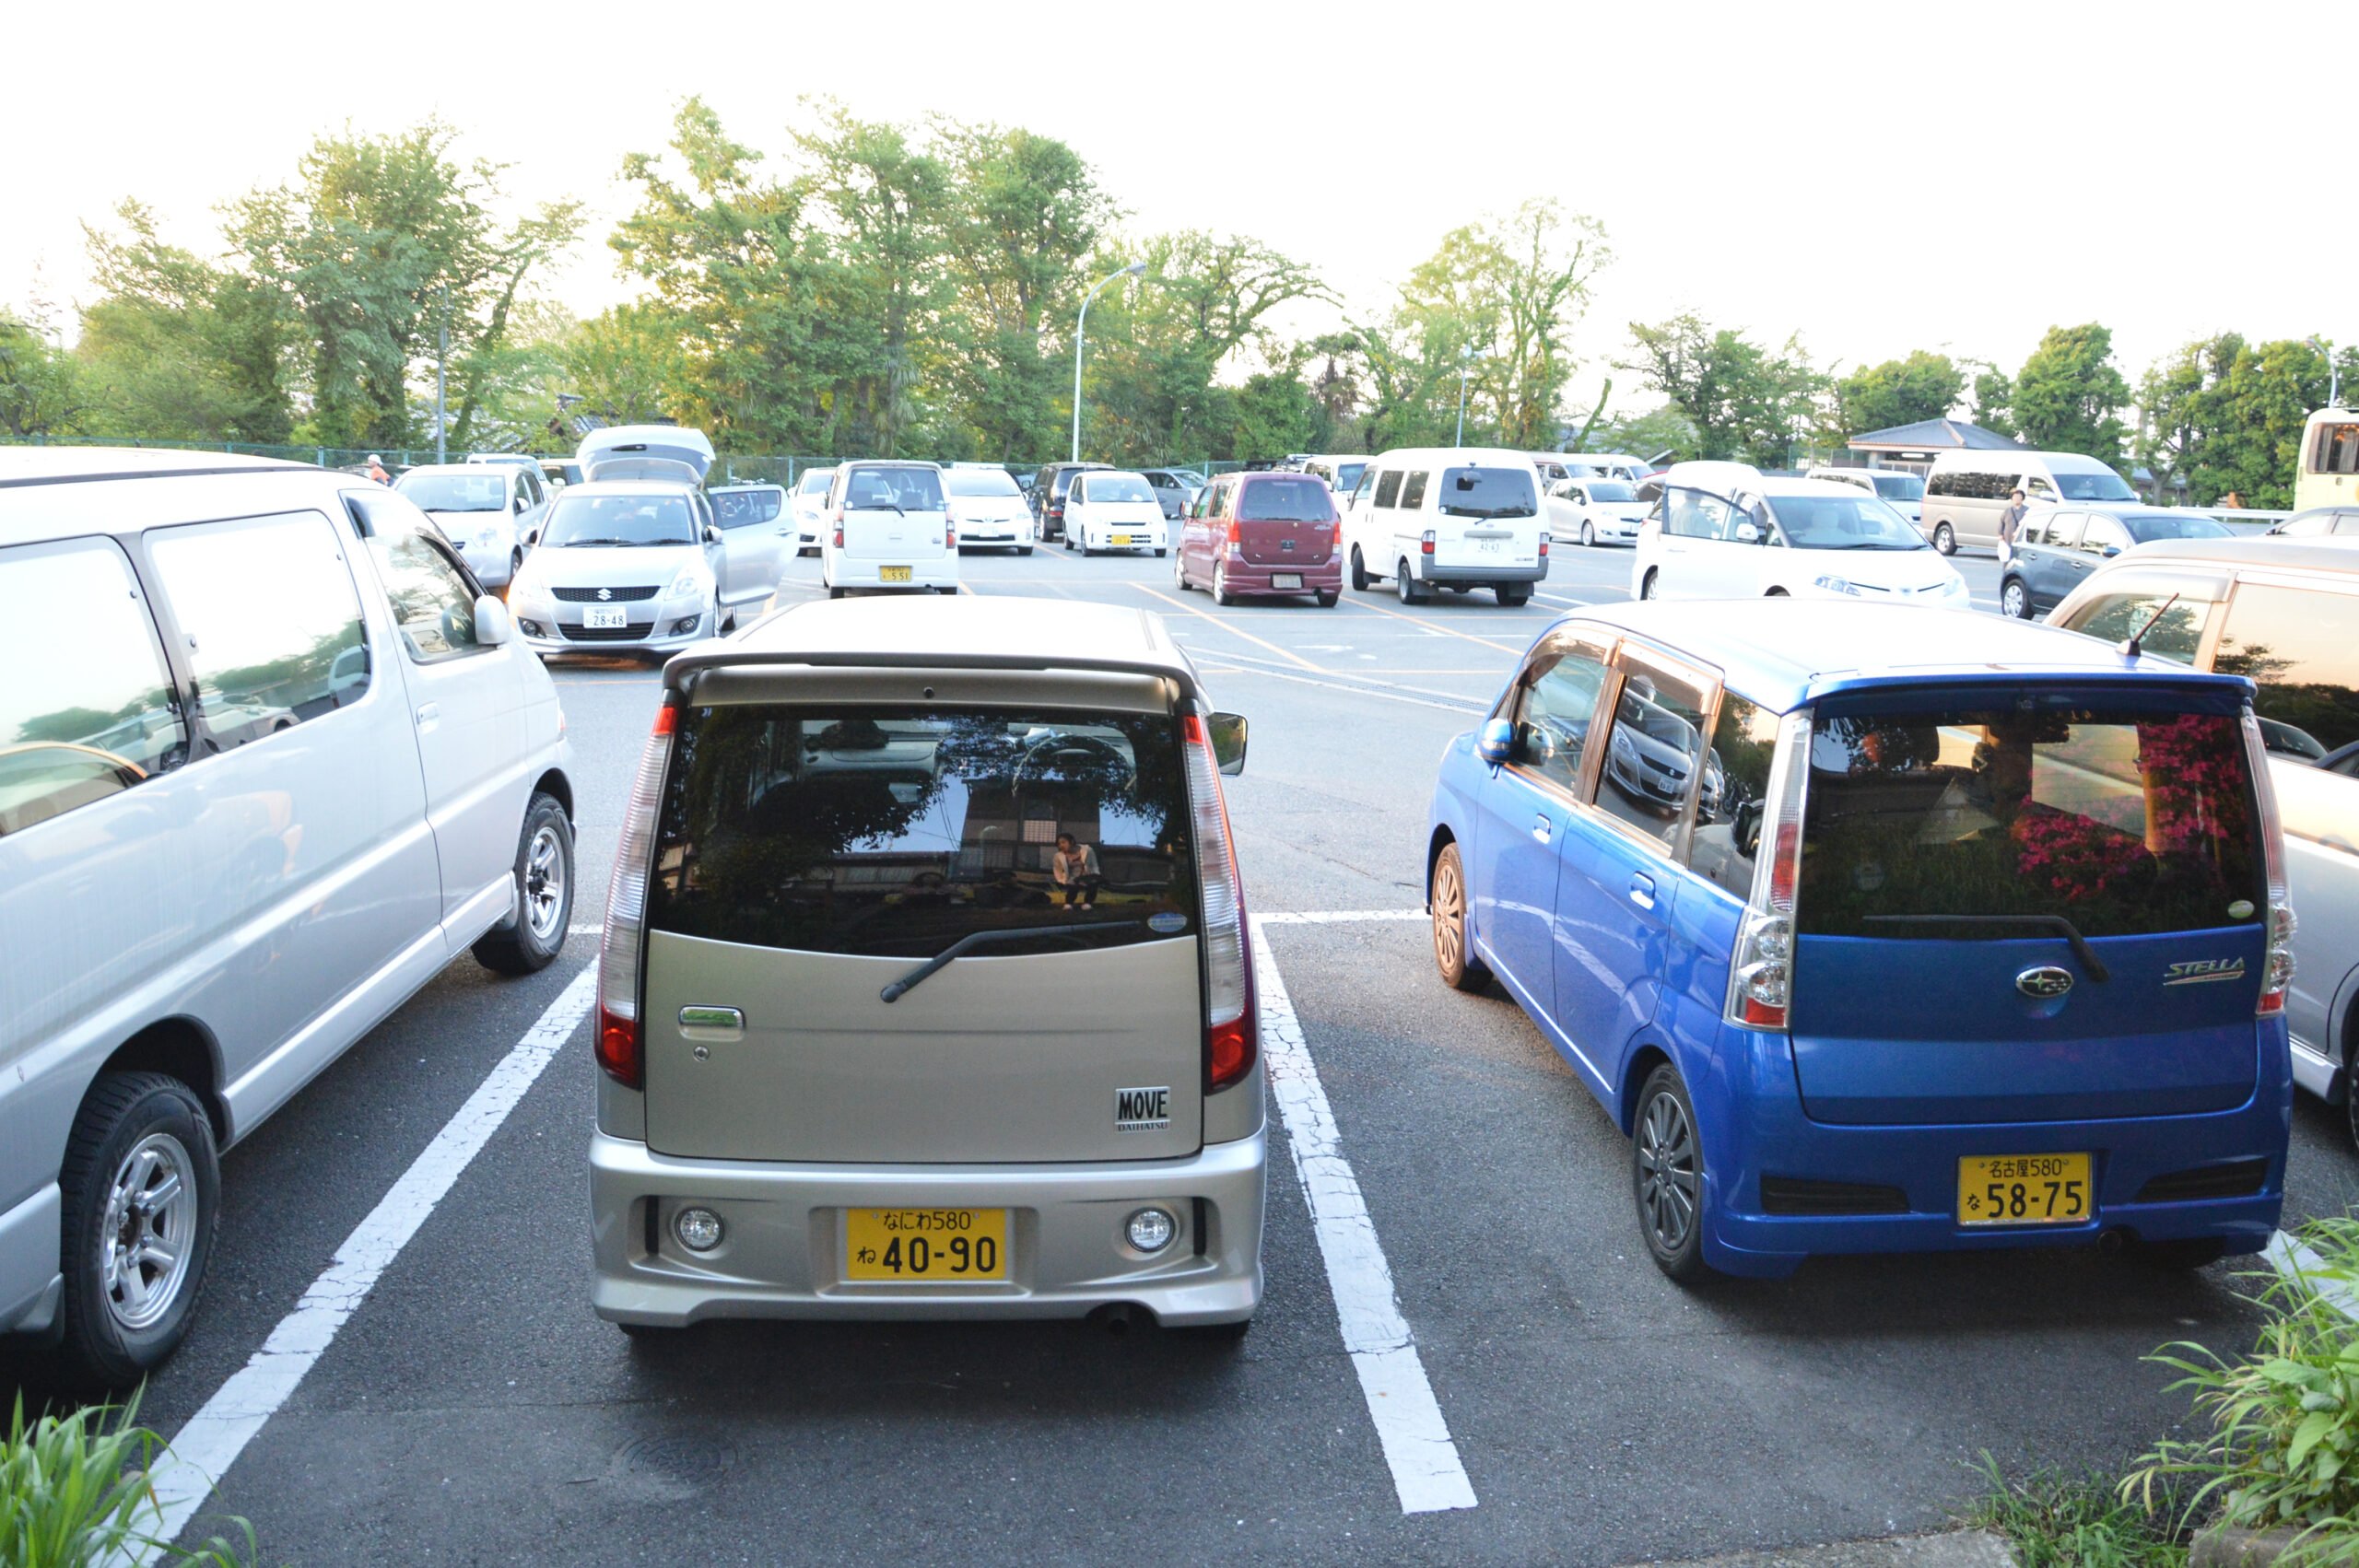 Kei car parking in Japan